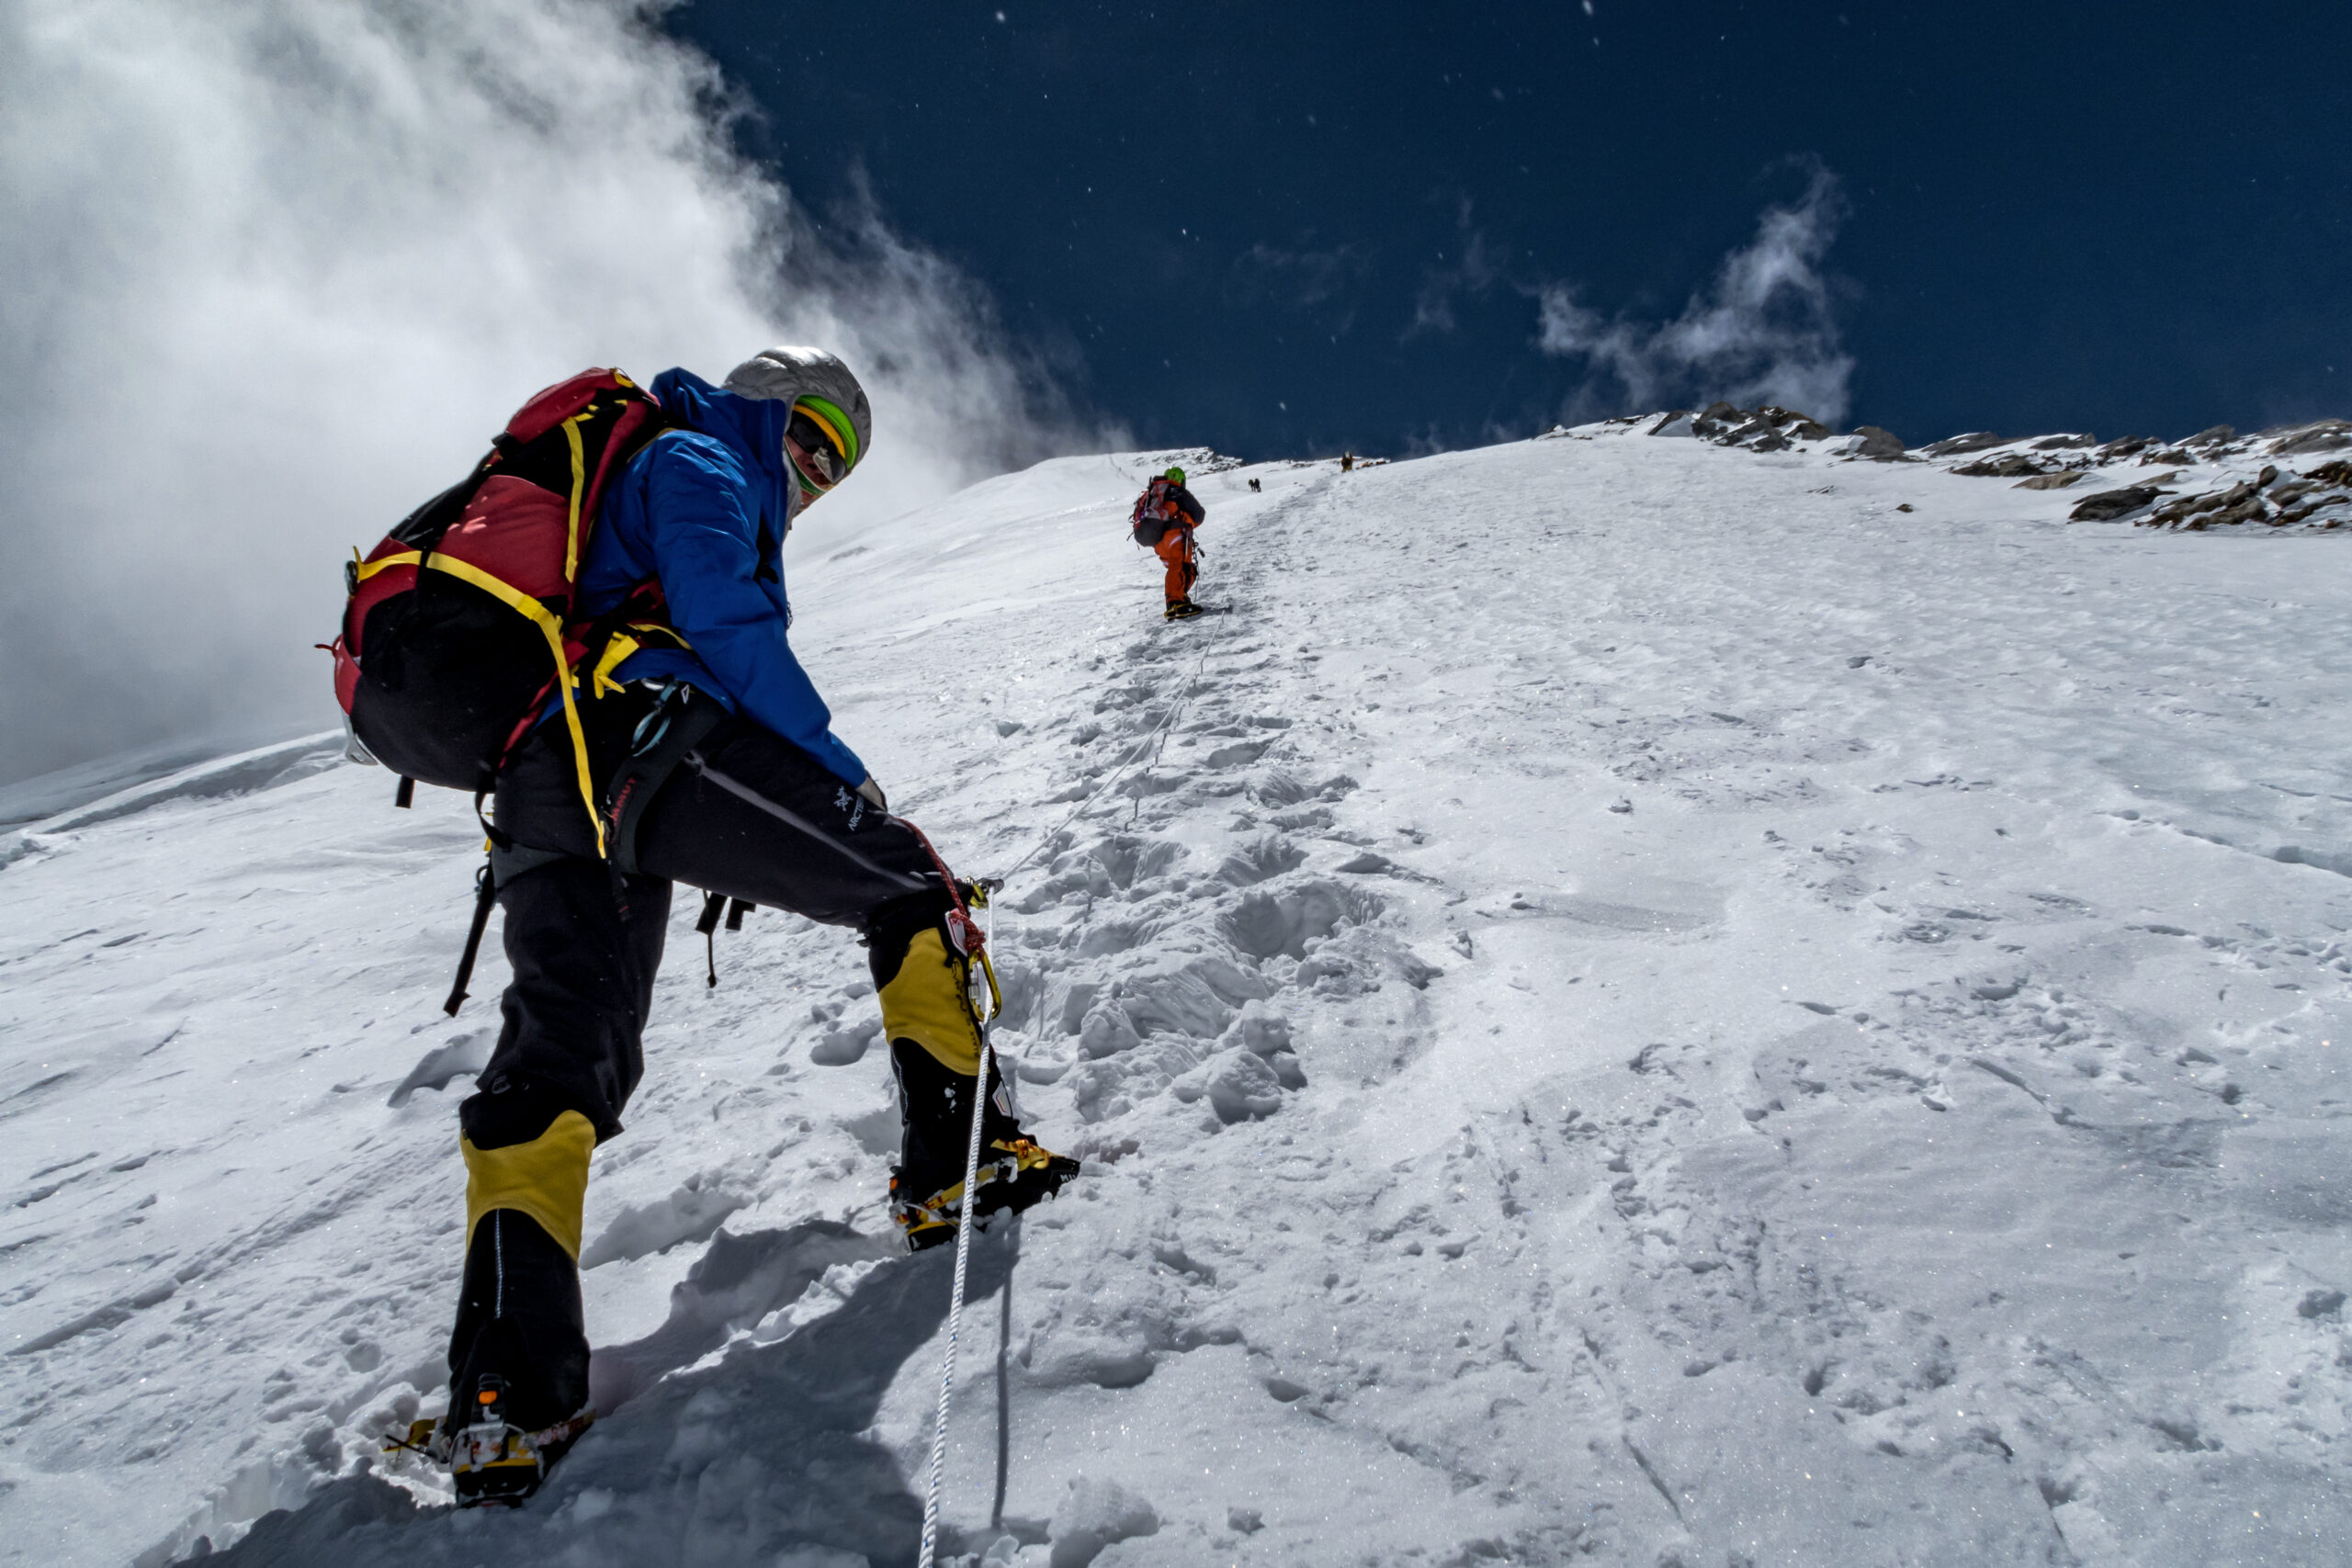 Nepal’s mountaineering season: 612 climbers, 68 groups, & growing diversity